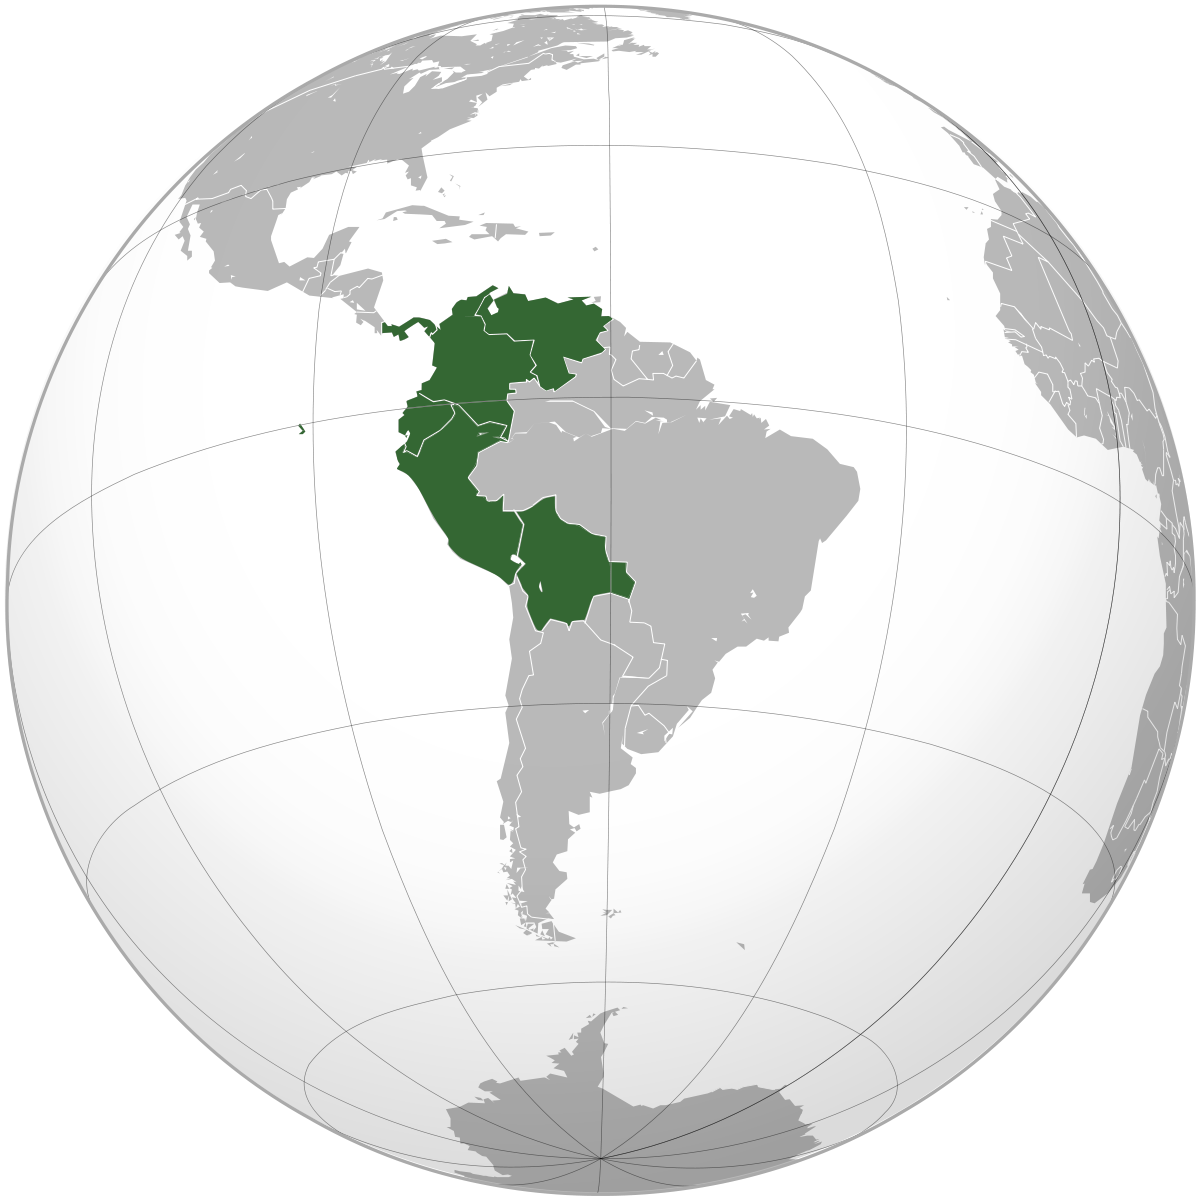 Bolivarian Countries